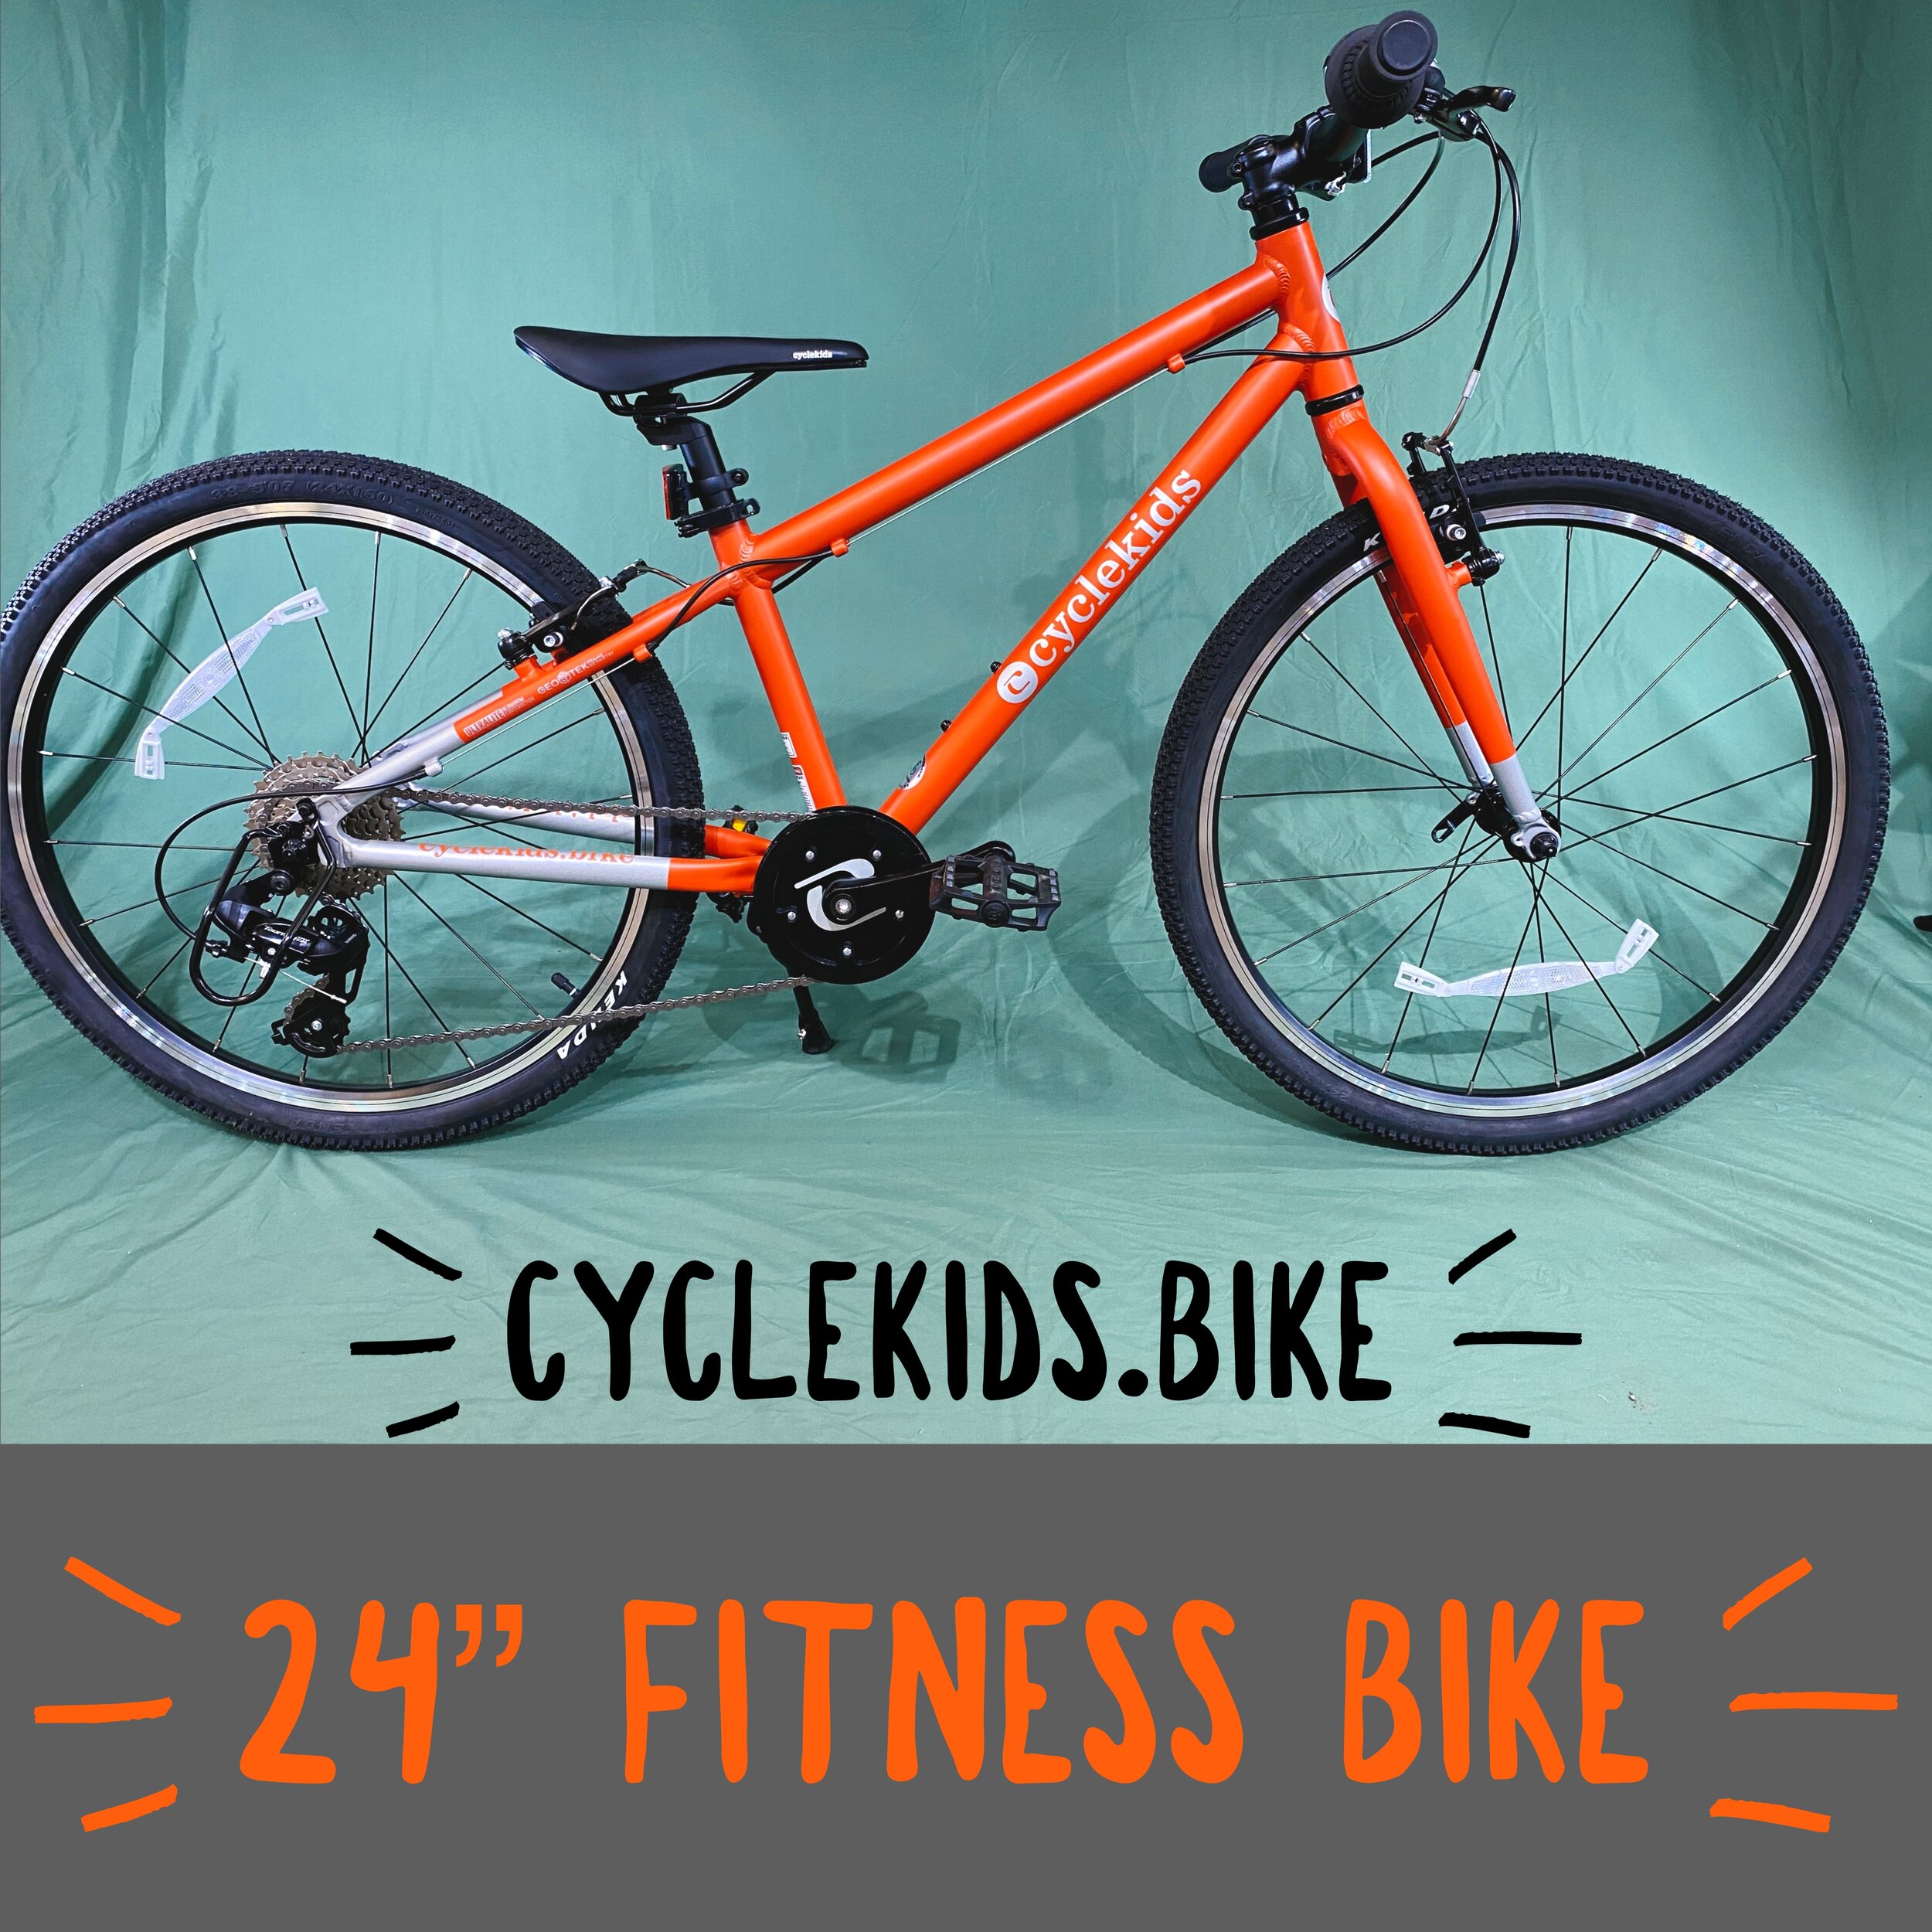 Cycle Kids 24" Fitness Bike -- Amazing Quality